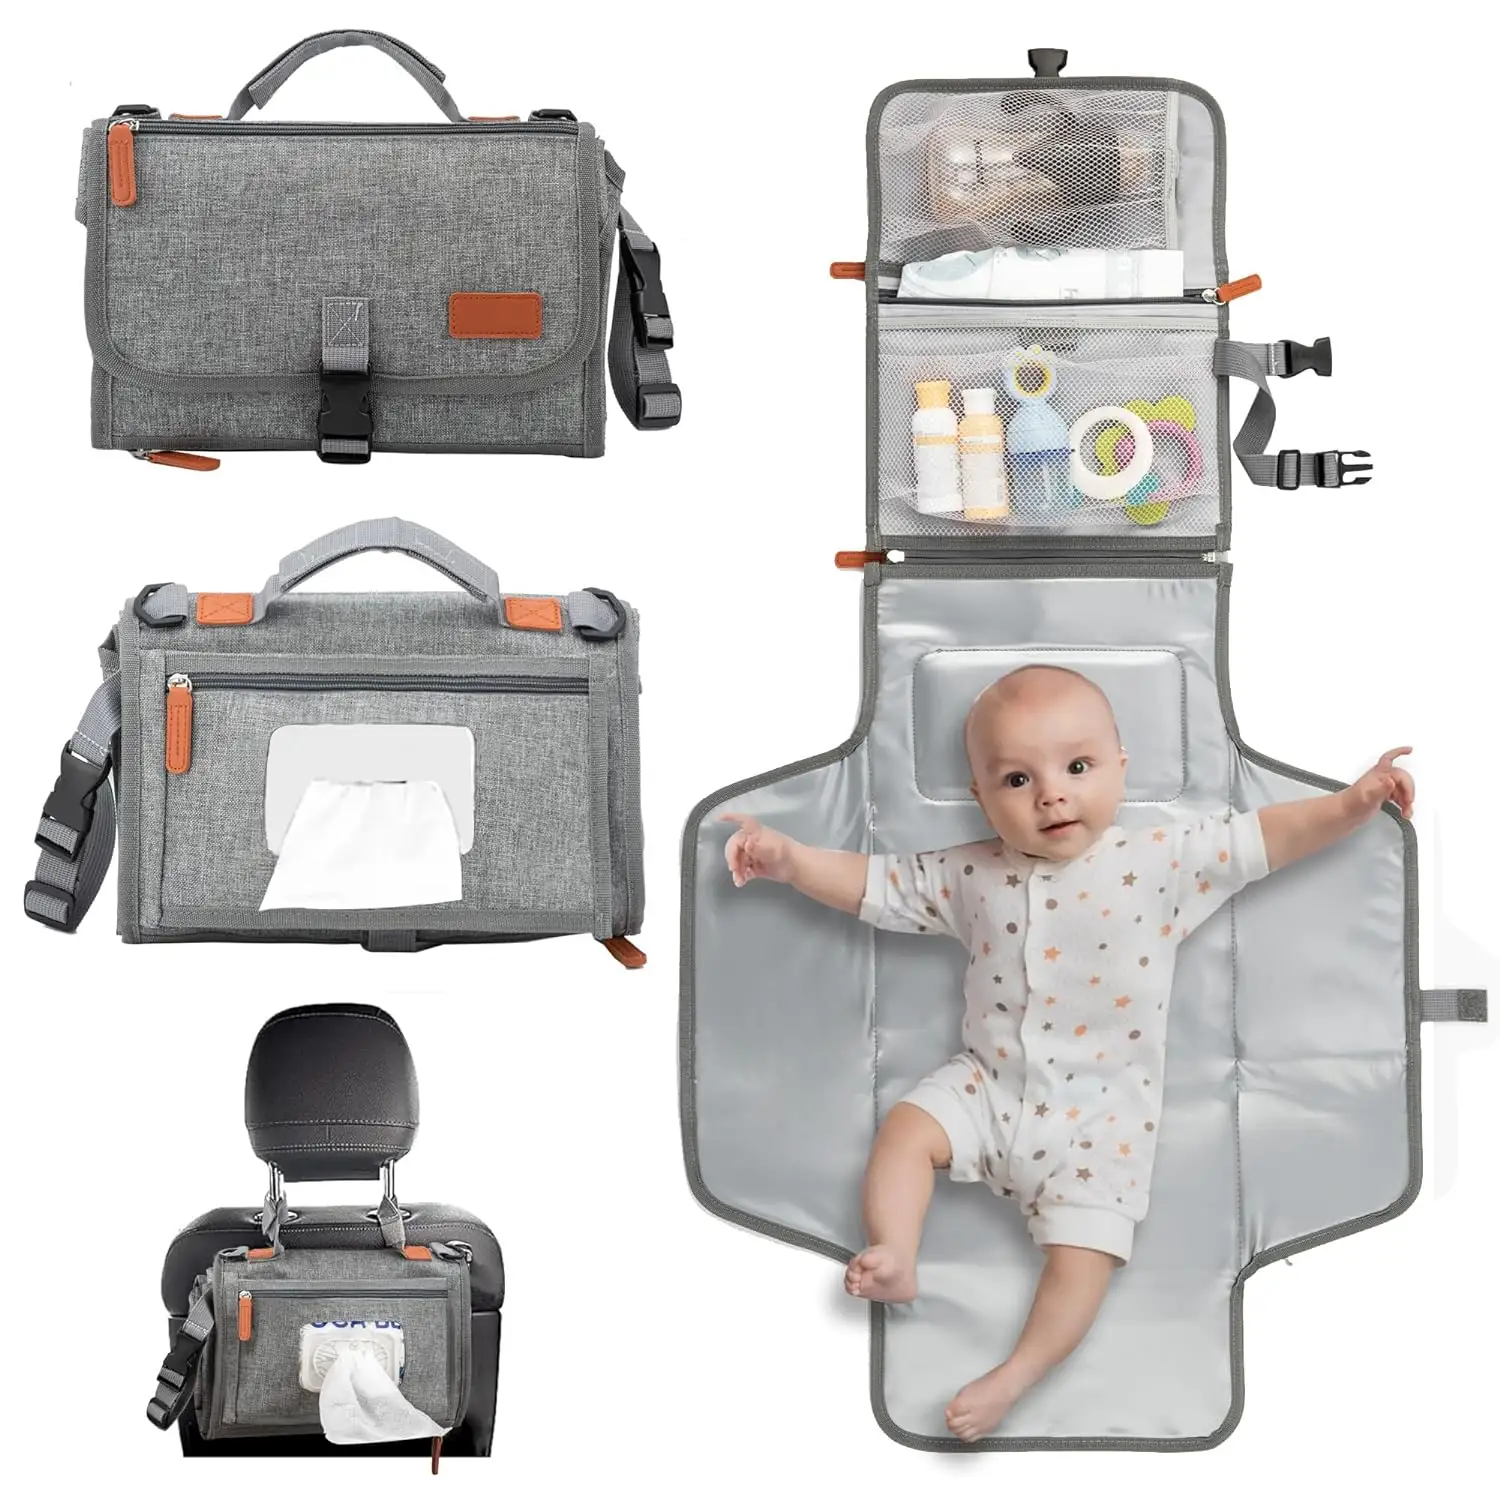 Hot selling travel baby portable Change Mat Bag Waterproof Baby diaper changing pad